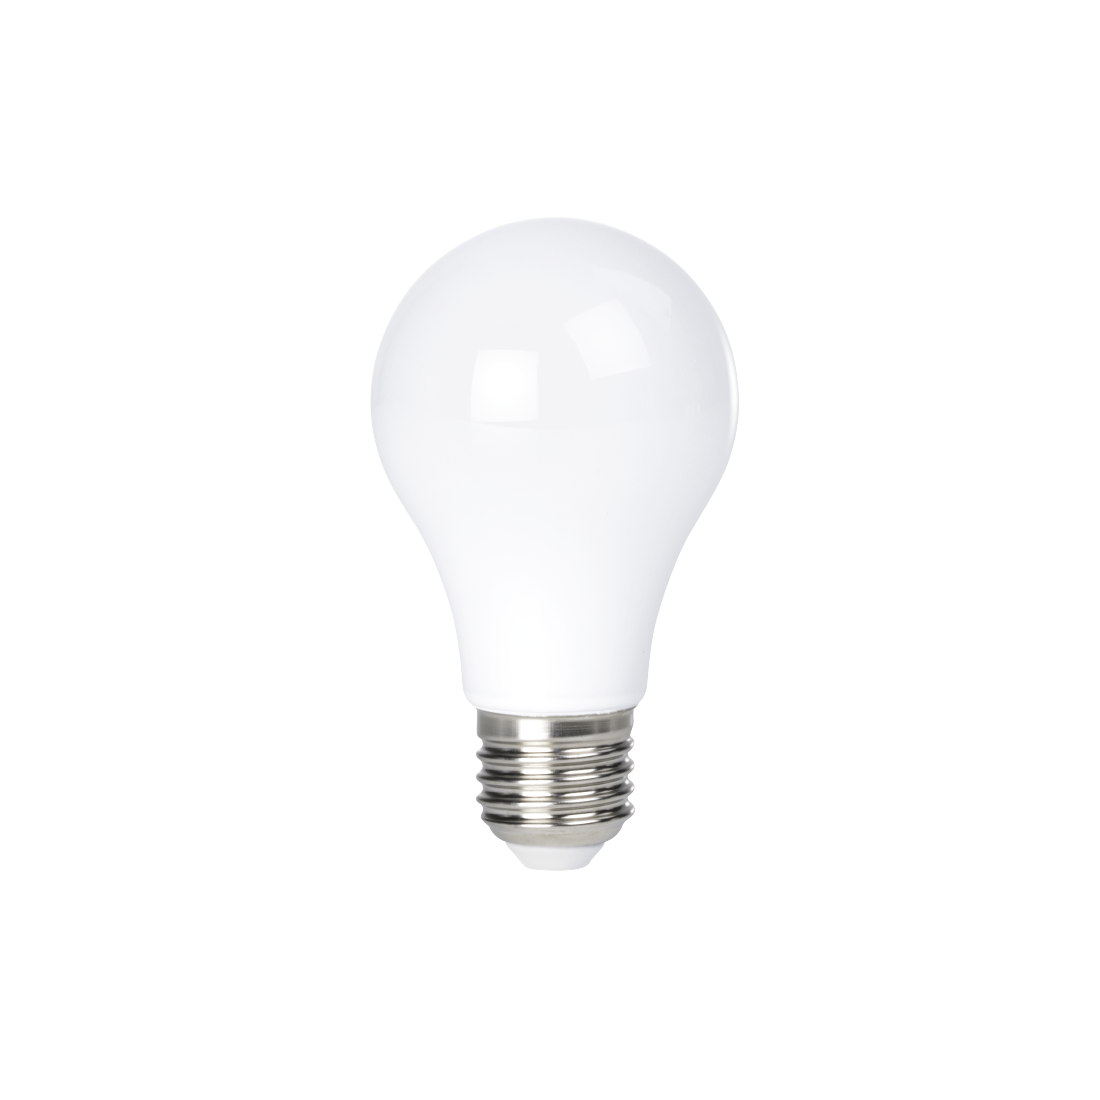 abx Druckfähige Abbildung - Xavax, LED-Lampe, E27, 630lm ersetzt 50W, Glühlampe, Warmweiß, Vollglas